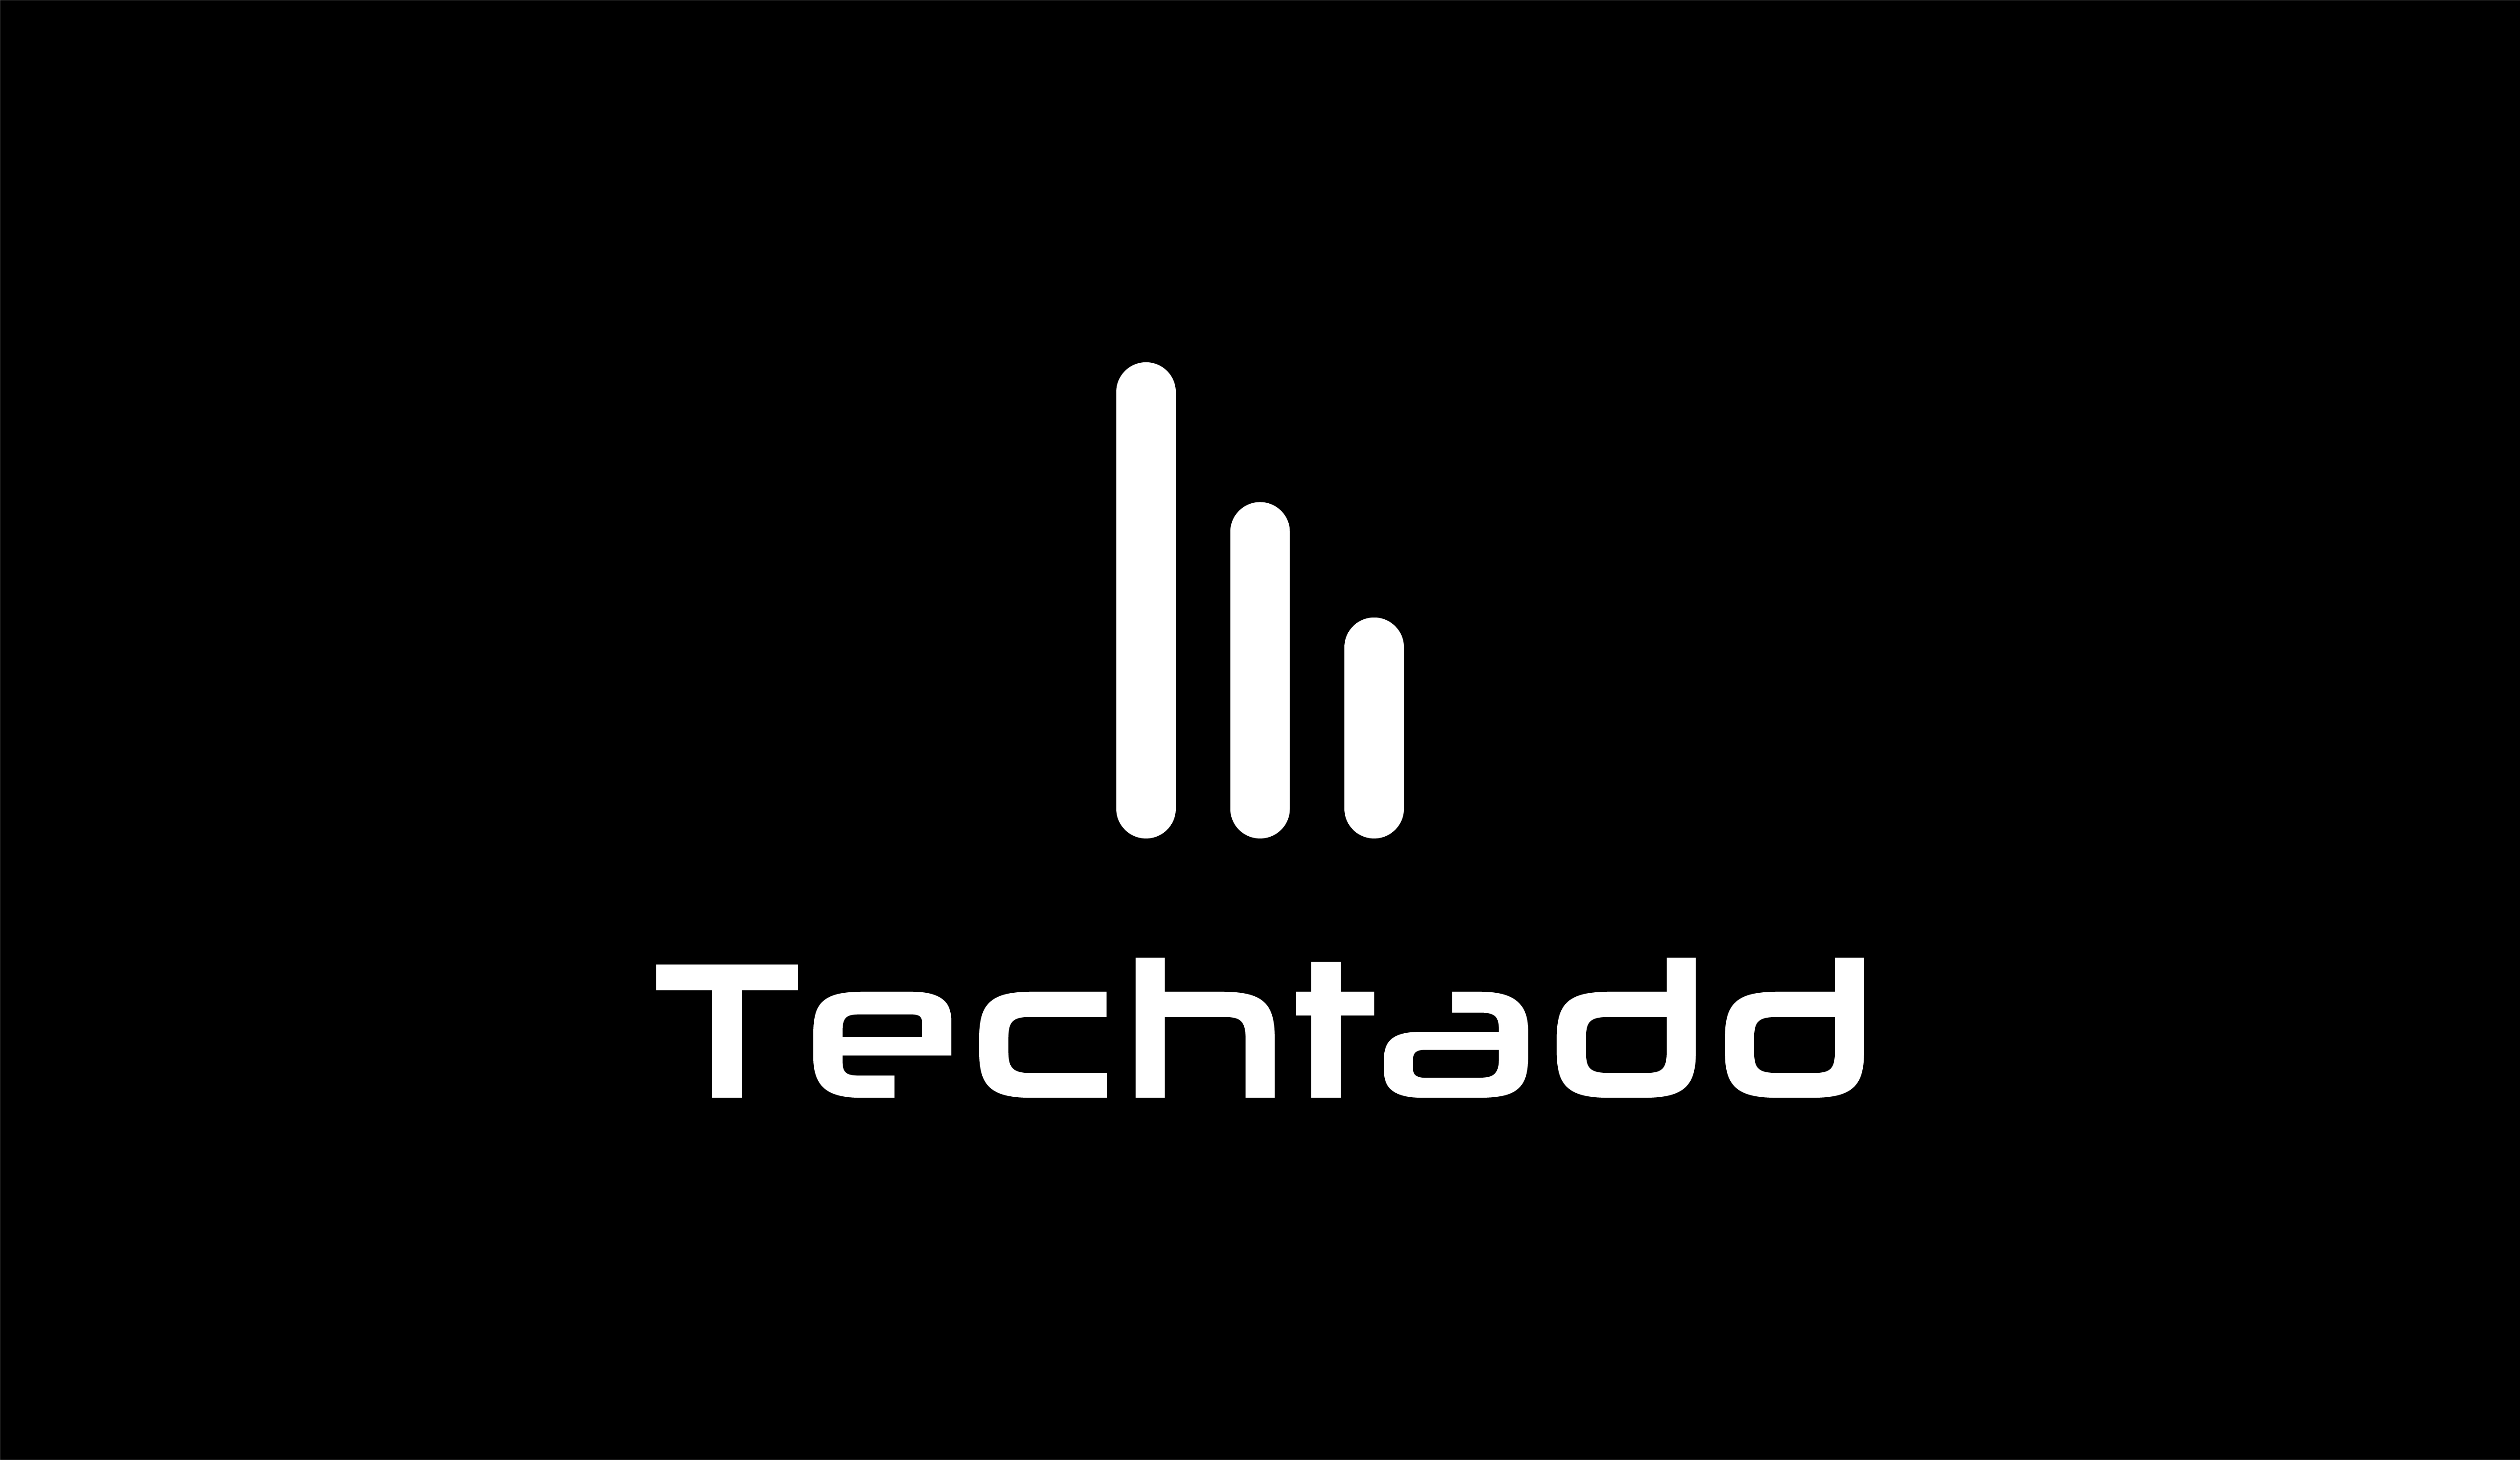 Logo of Techtadd